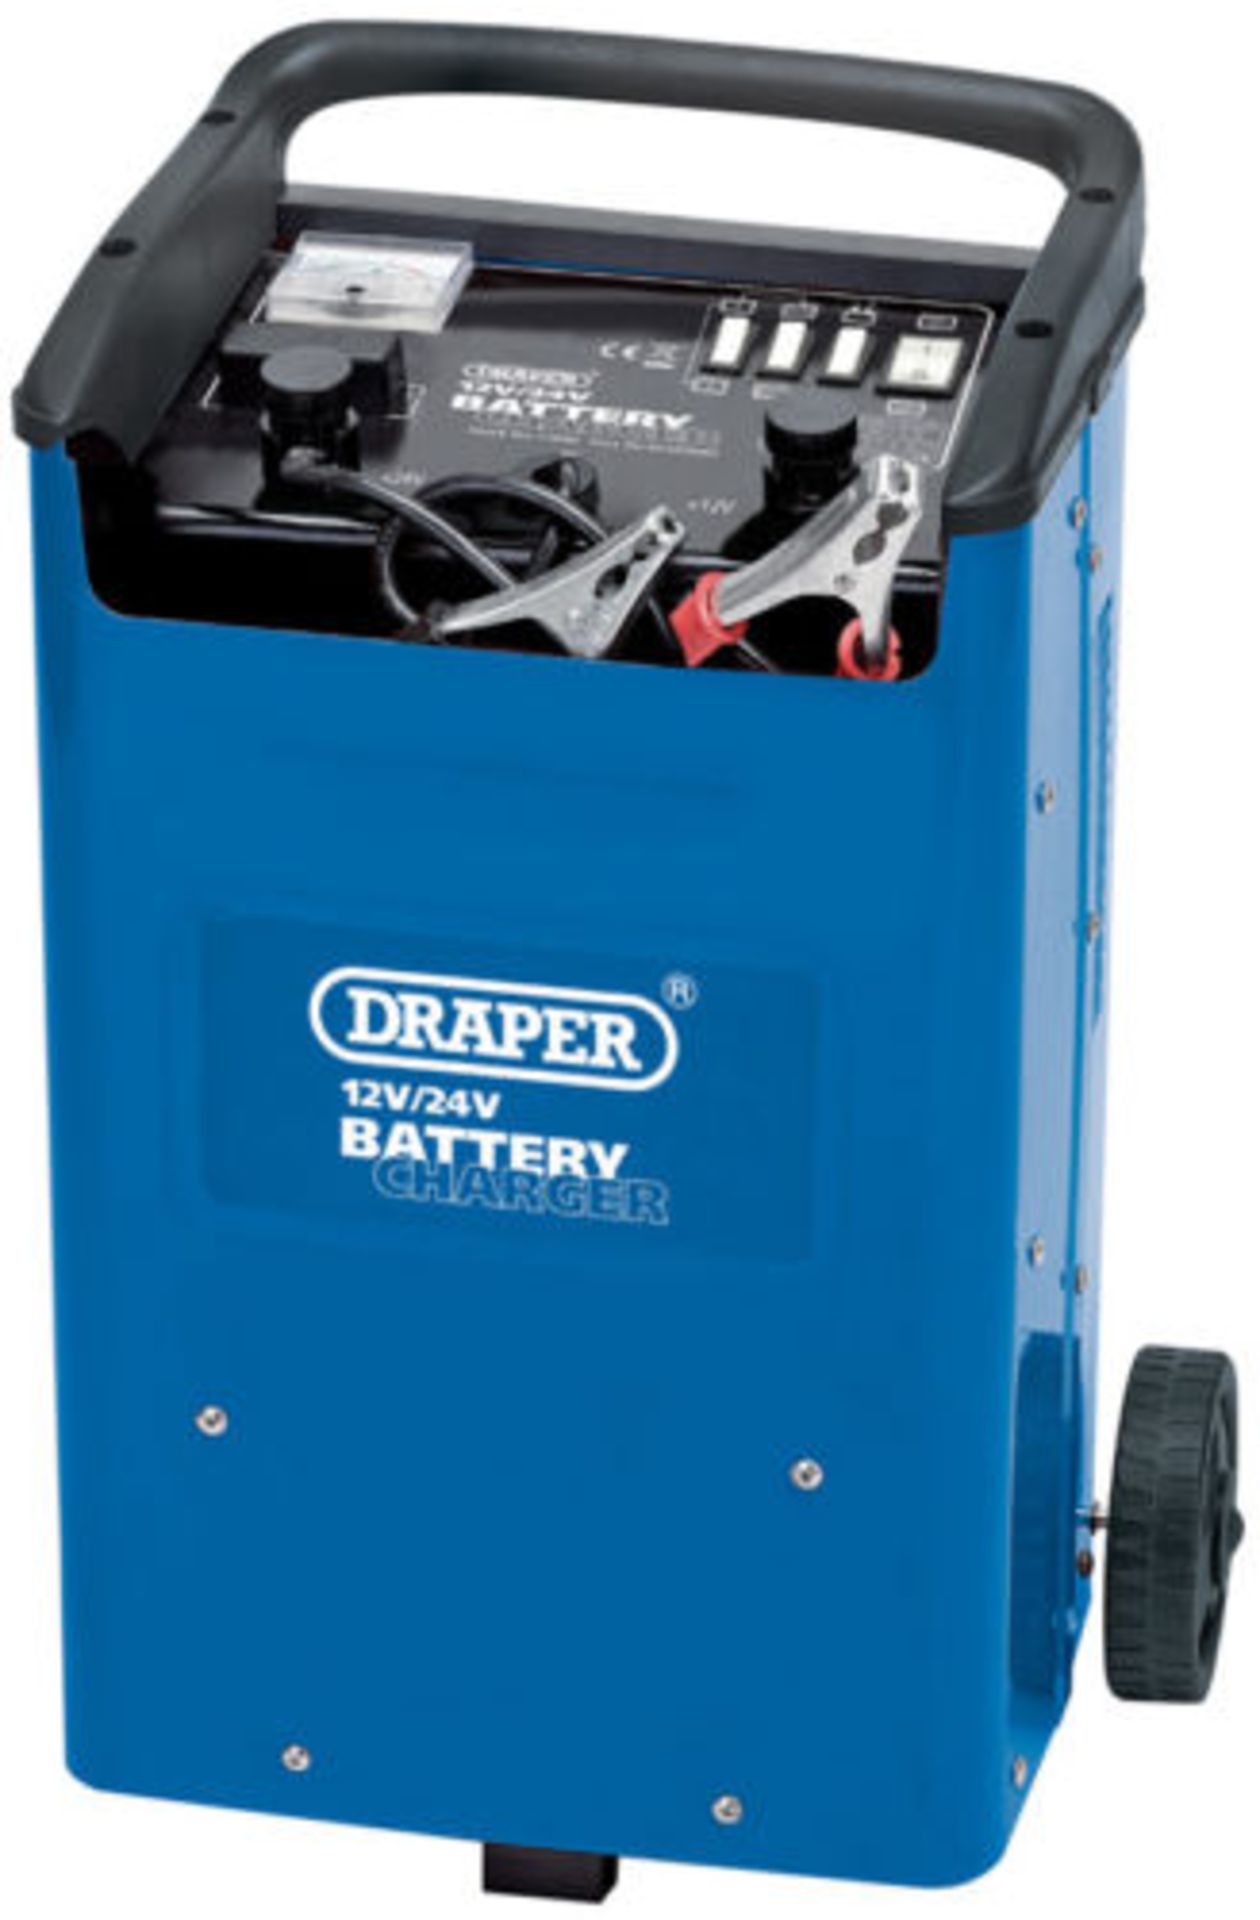 Draper BOOSTER 12/24V 260A Battery Starter/Charger